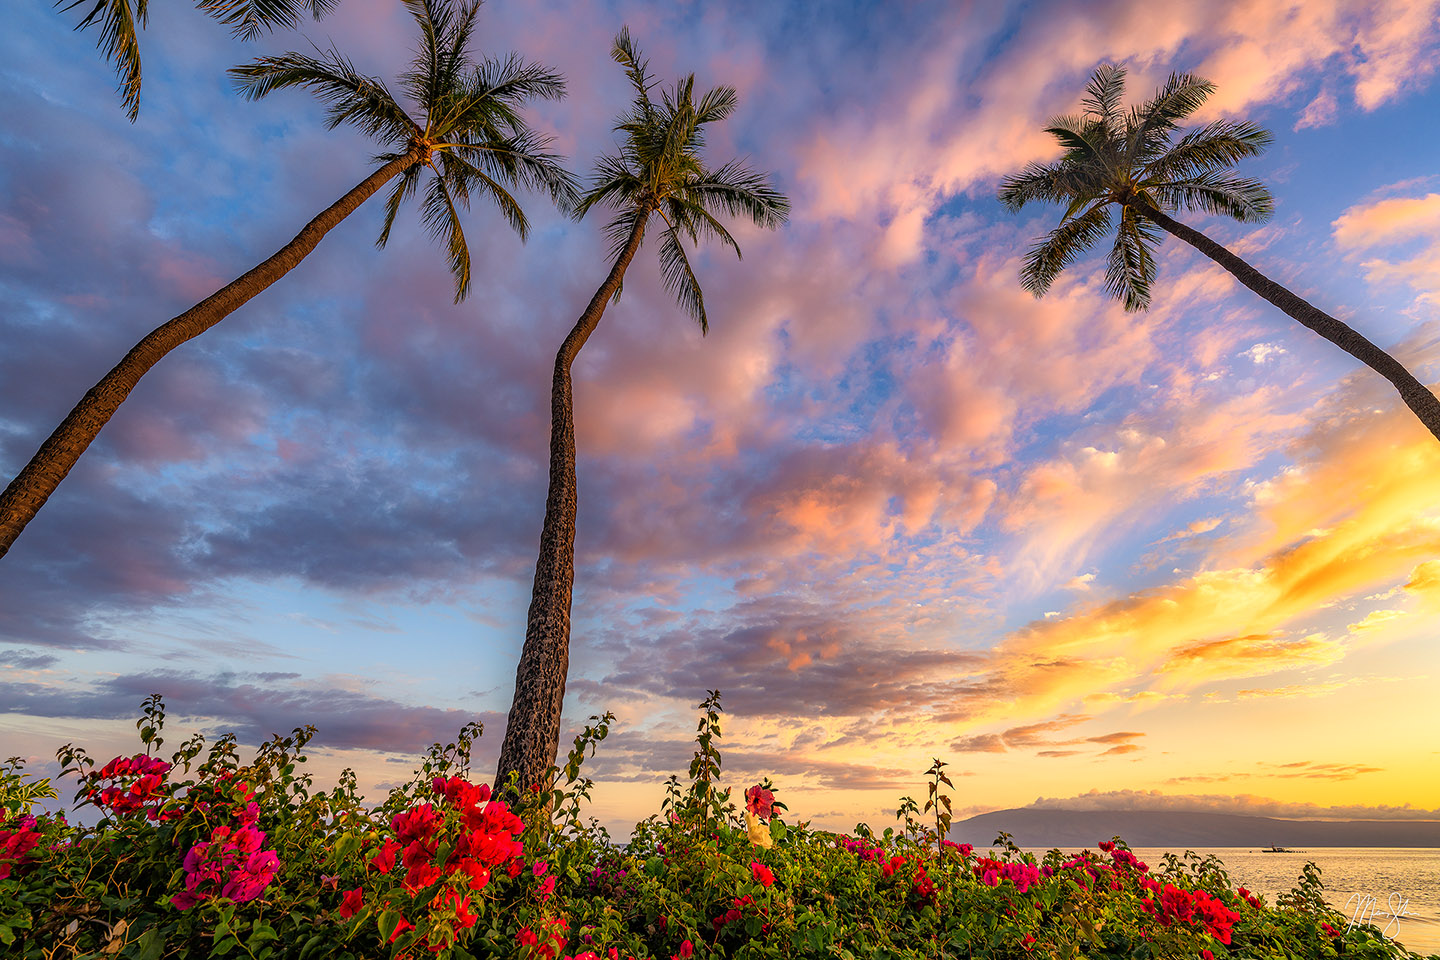 Lahaina Beach Palm Trees at Sunset